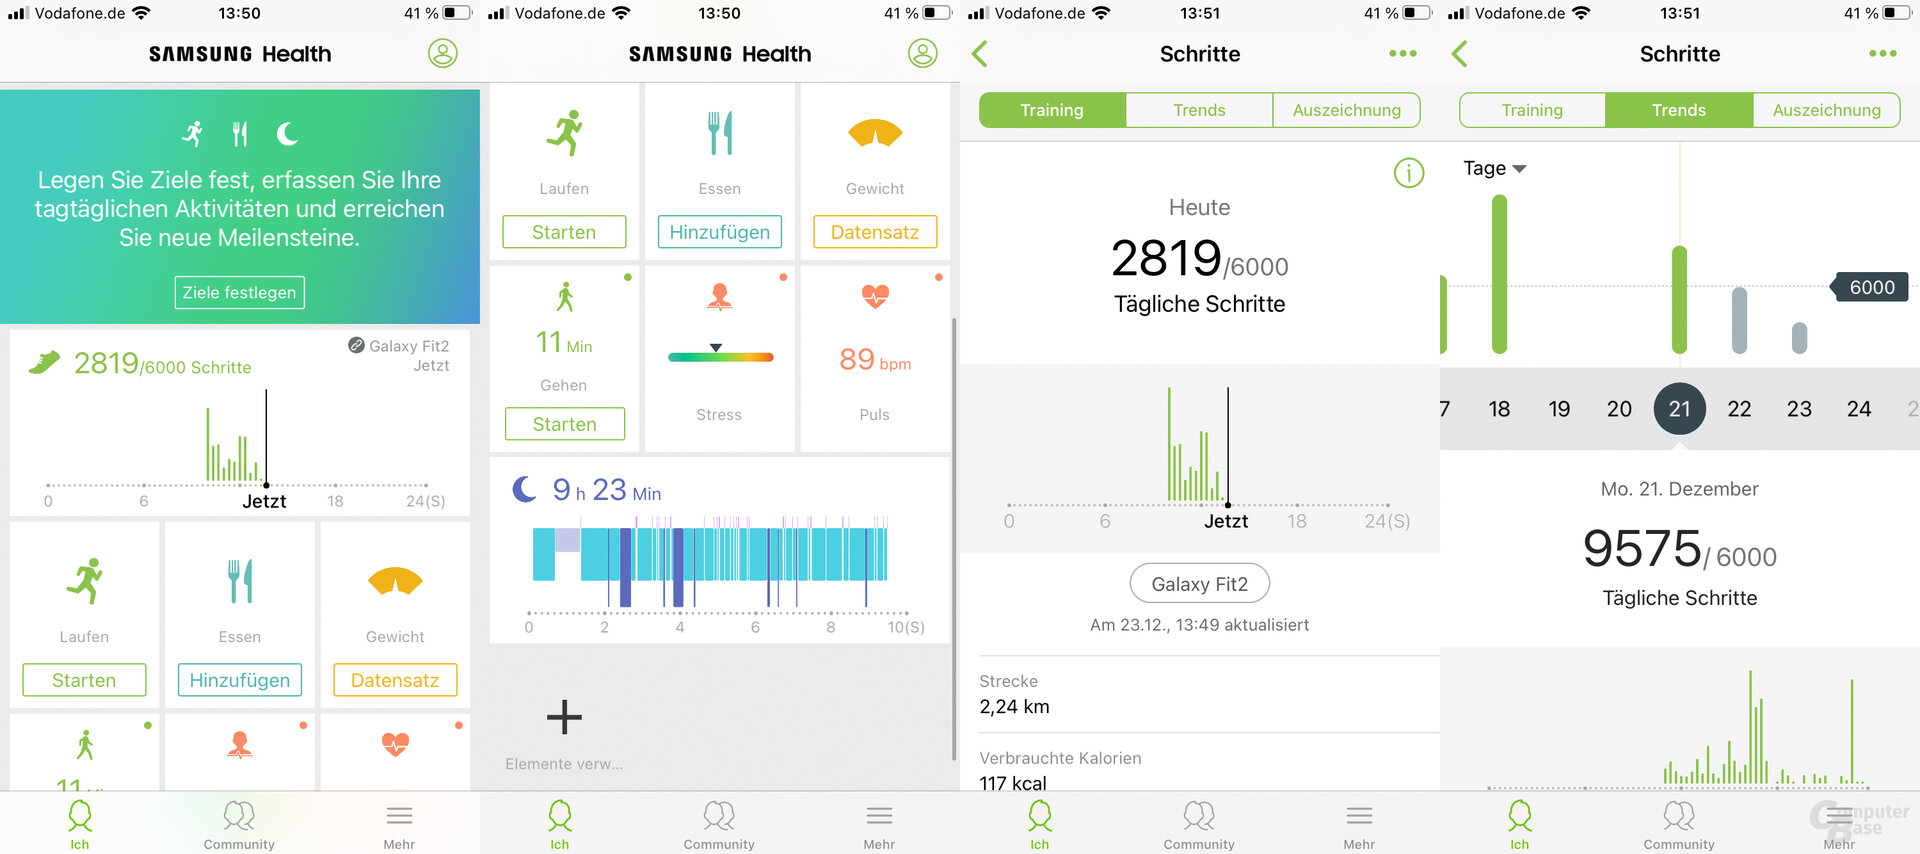 Samsung Galaxy Fit2 im Test: Samsung Health